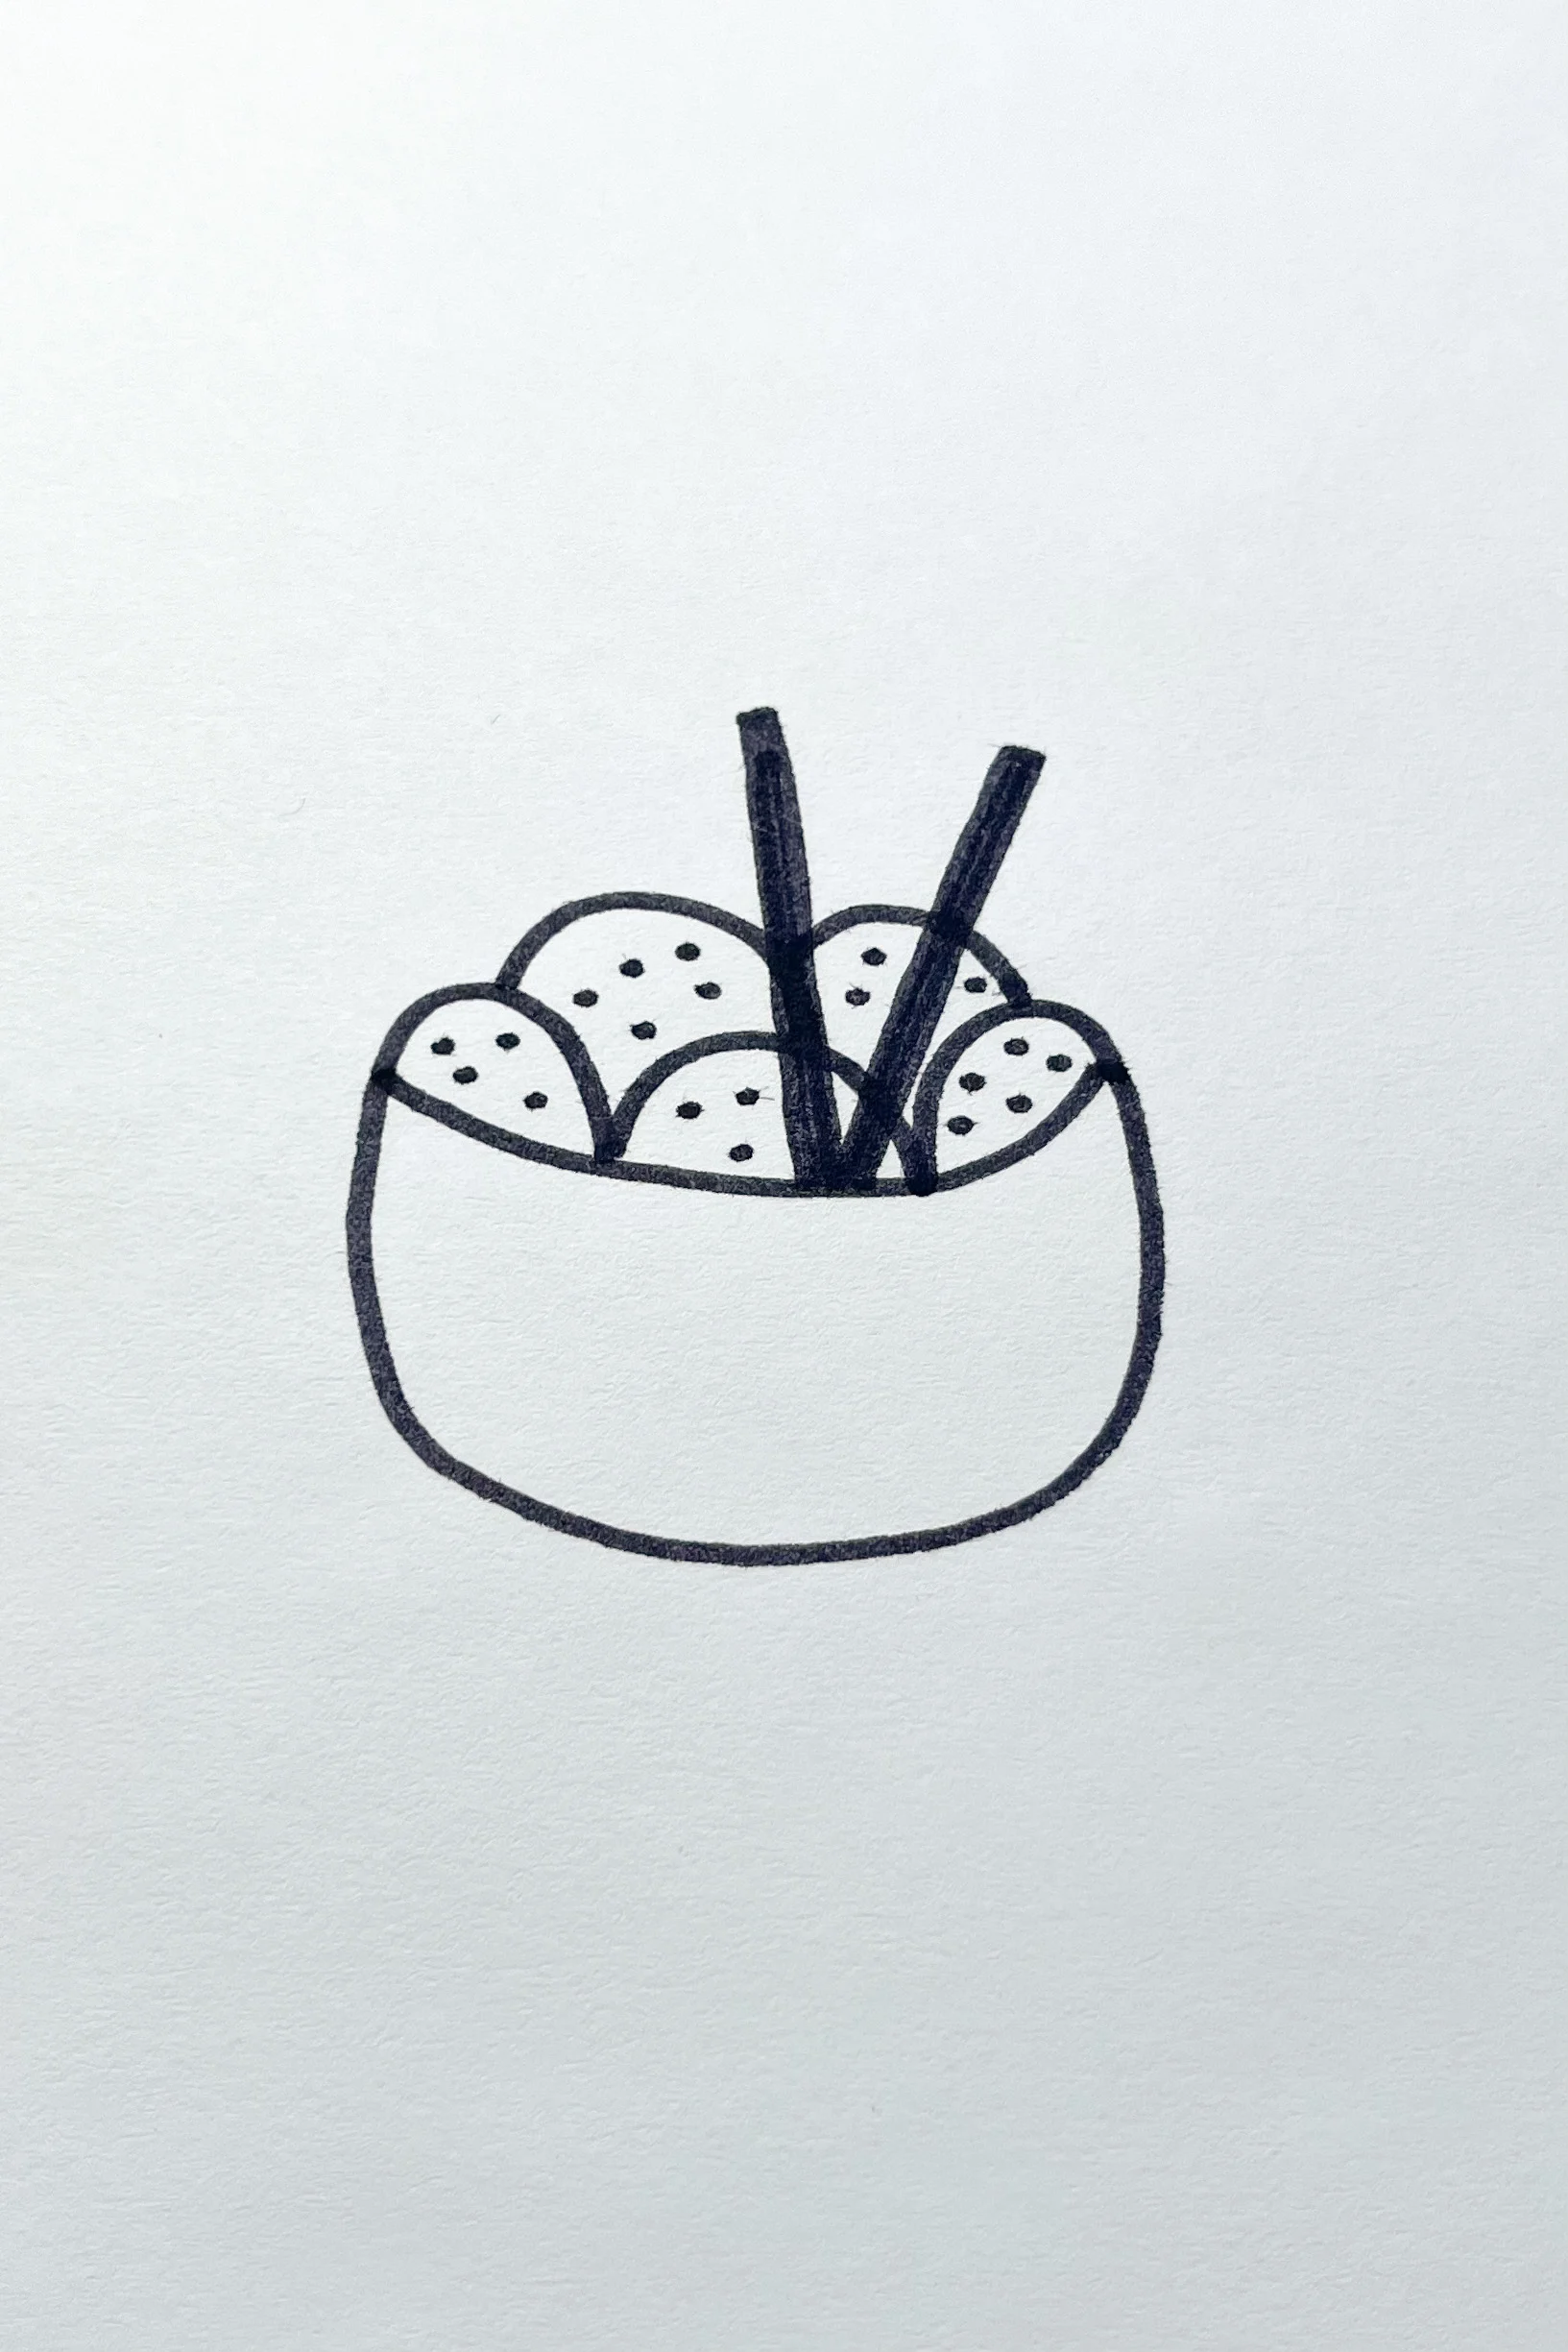 sushi bowl drawing